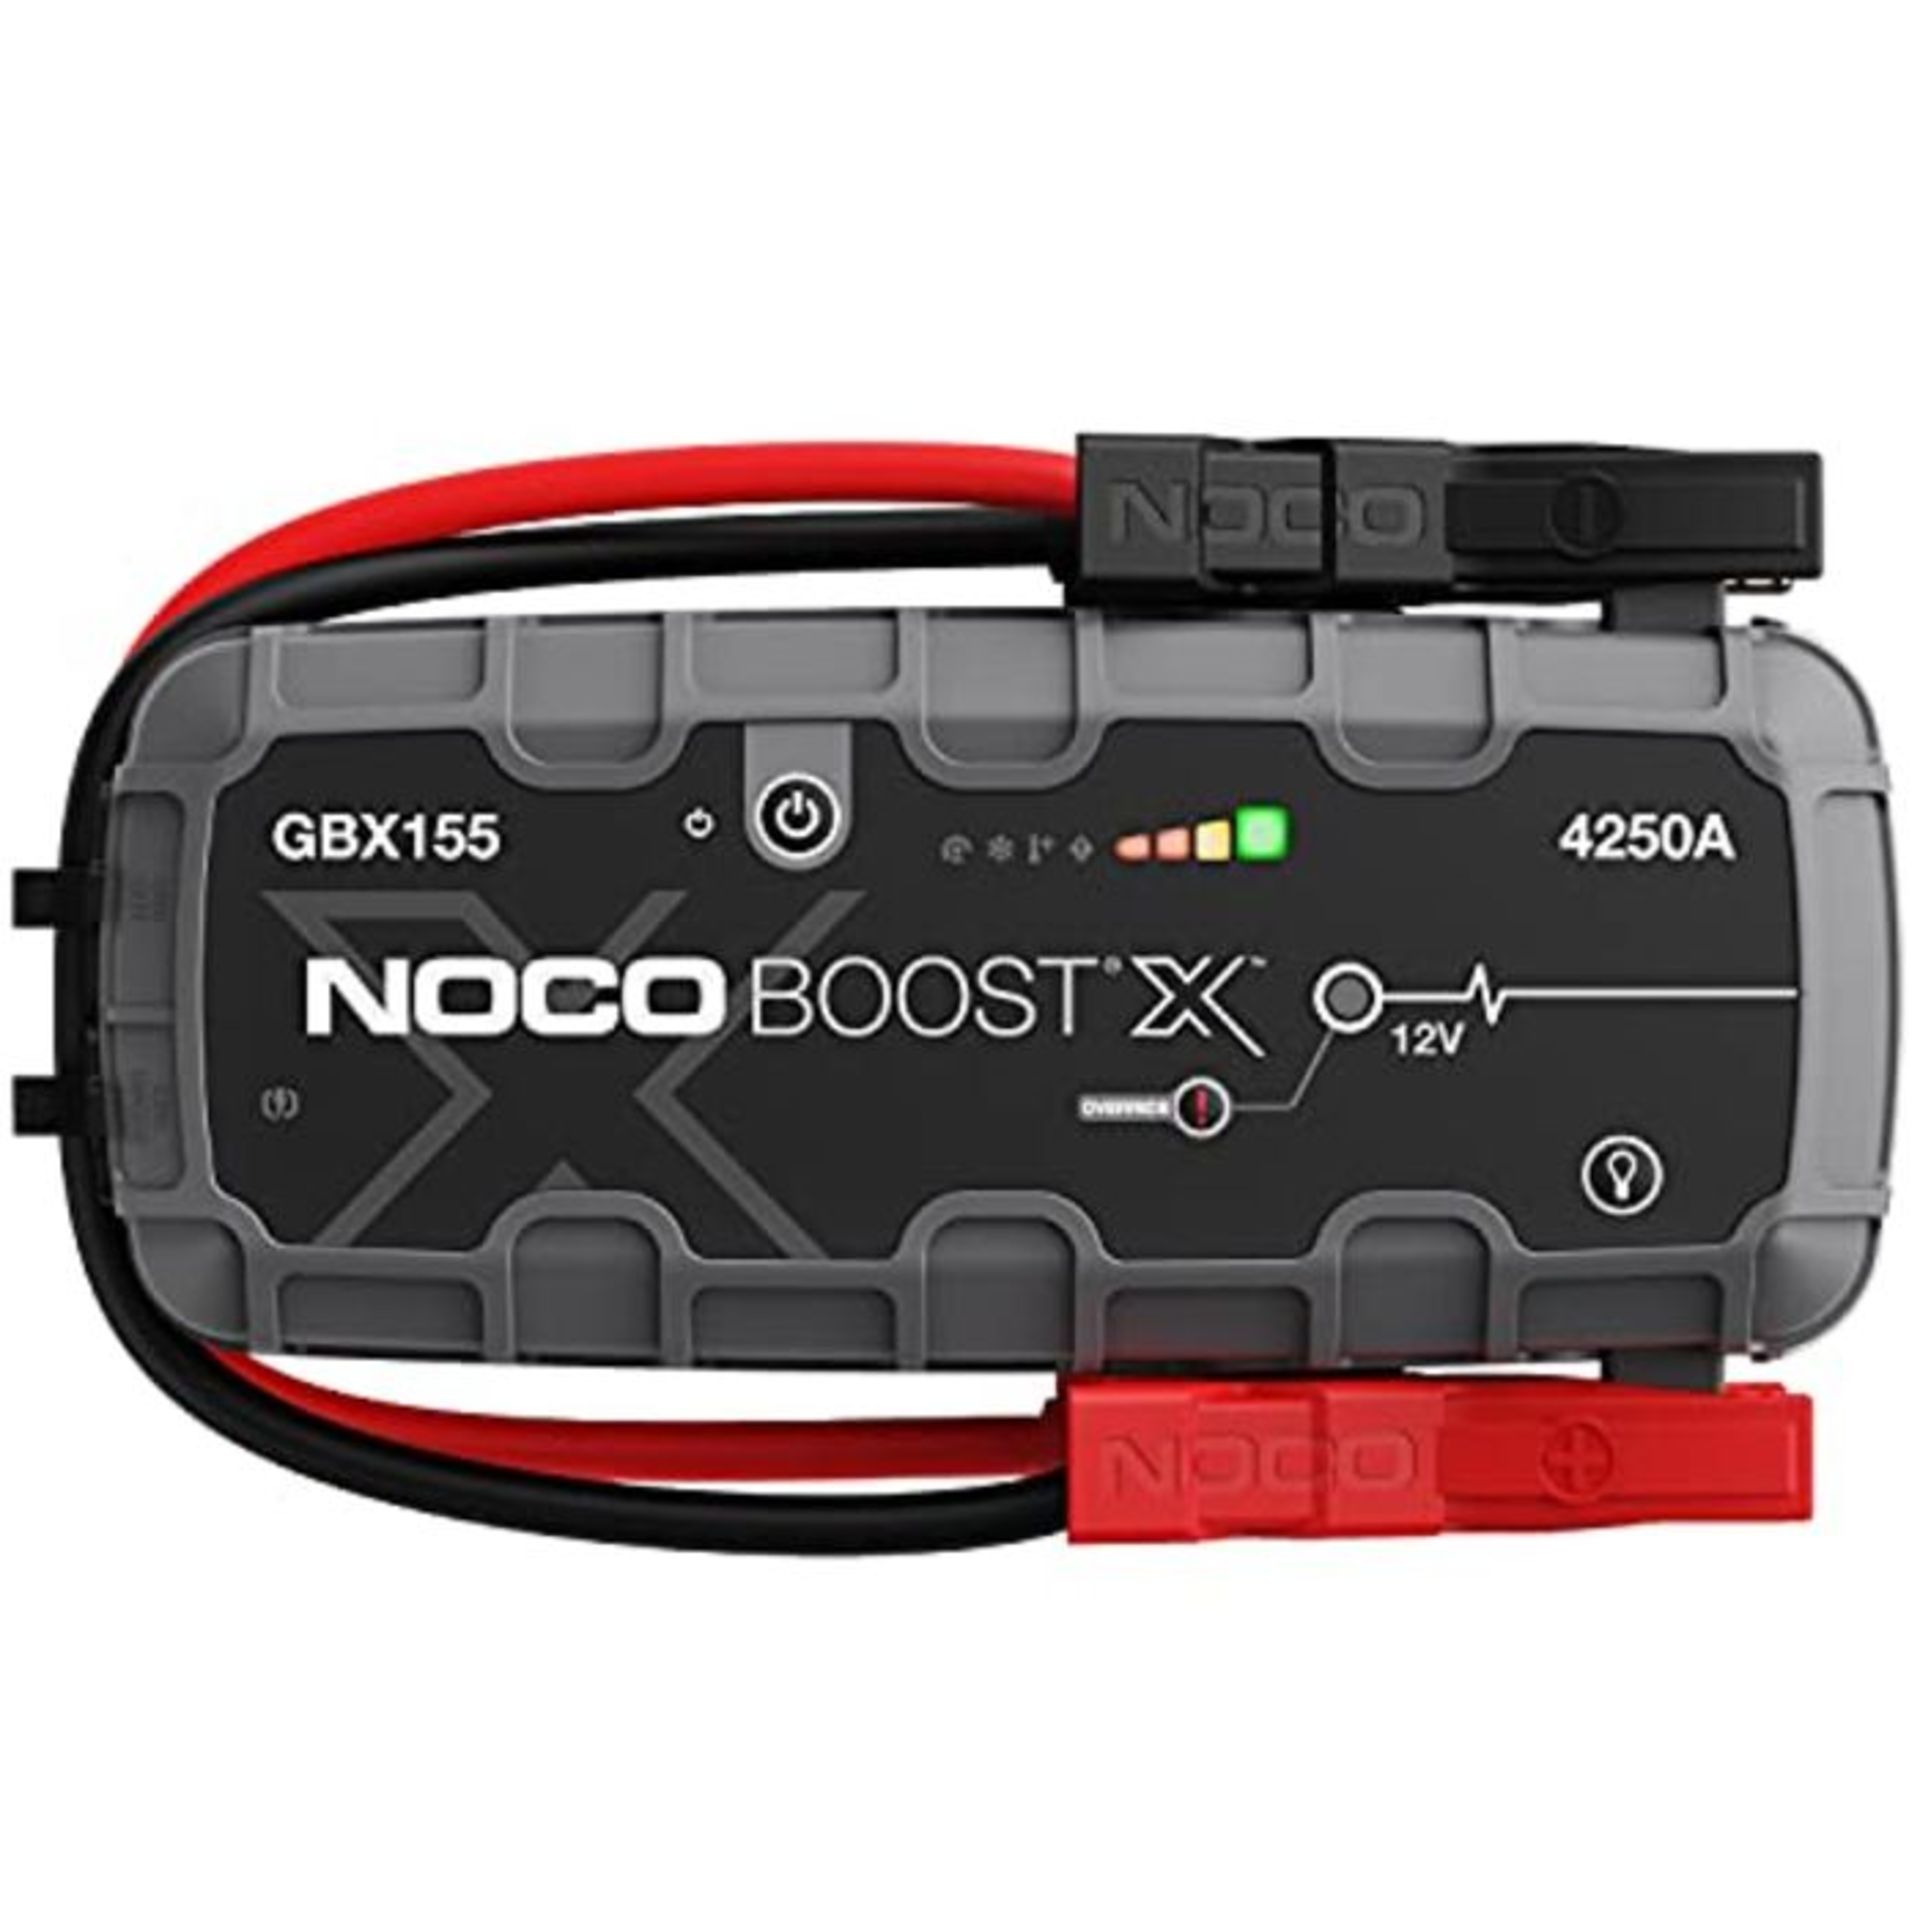 RRP £379.00 NOCO Boost X GBX155 4250A 12V UltraSafe Portable Lithium Car Jump Starter, Heavy-Duty